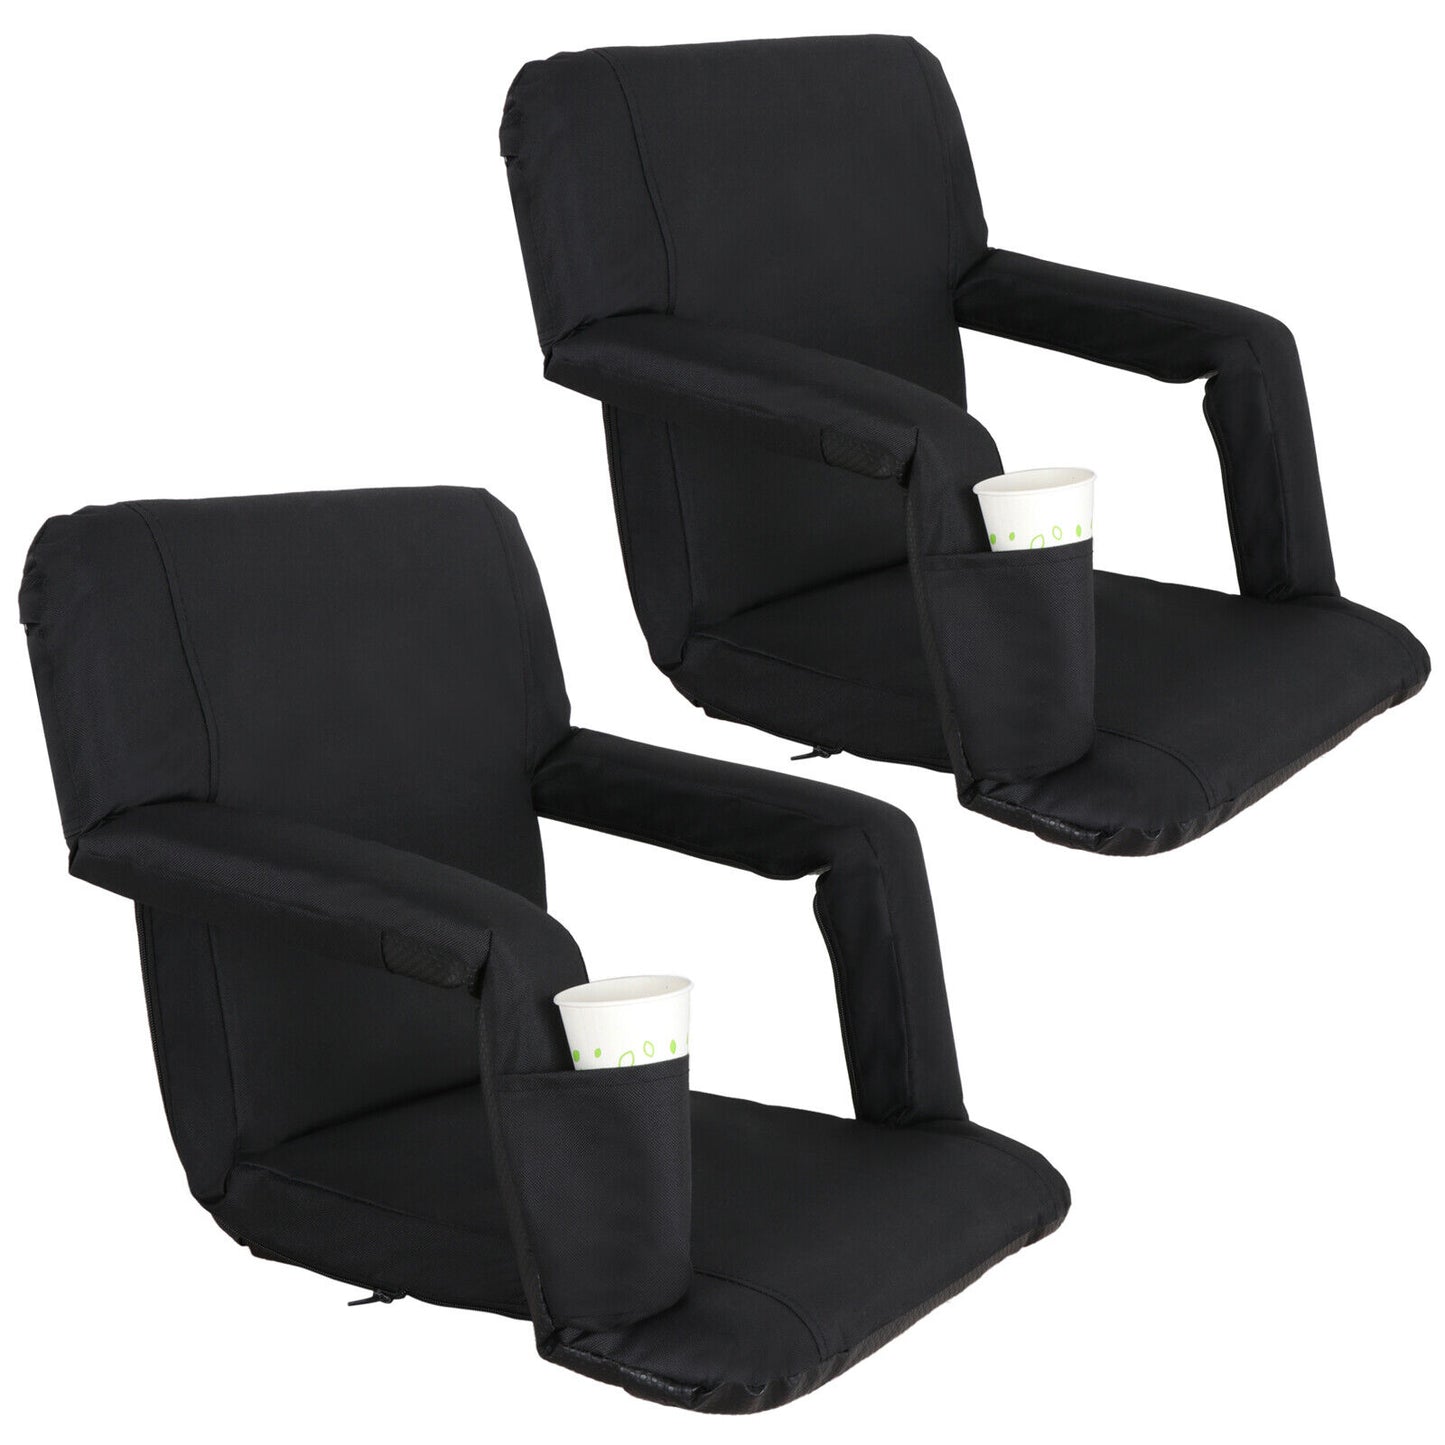 2 PCS Black Stadium Seat Bleacher Chair Cushion - 5 Reclining Positions